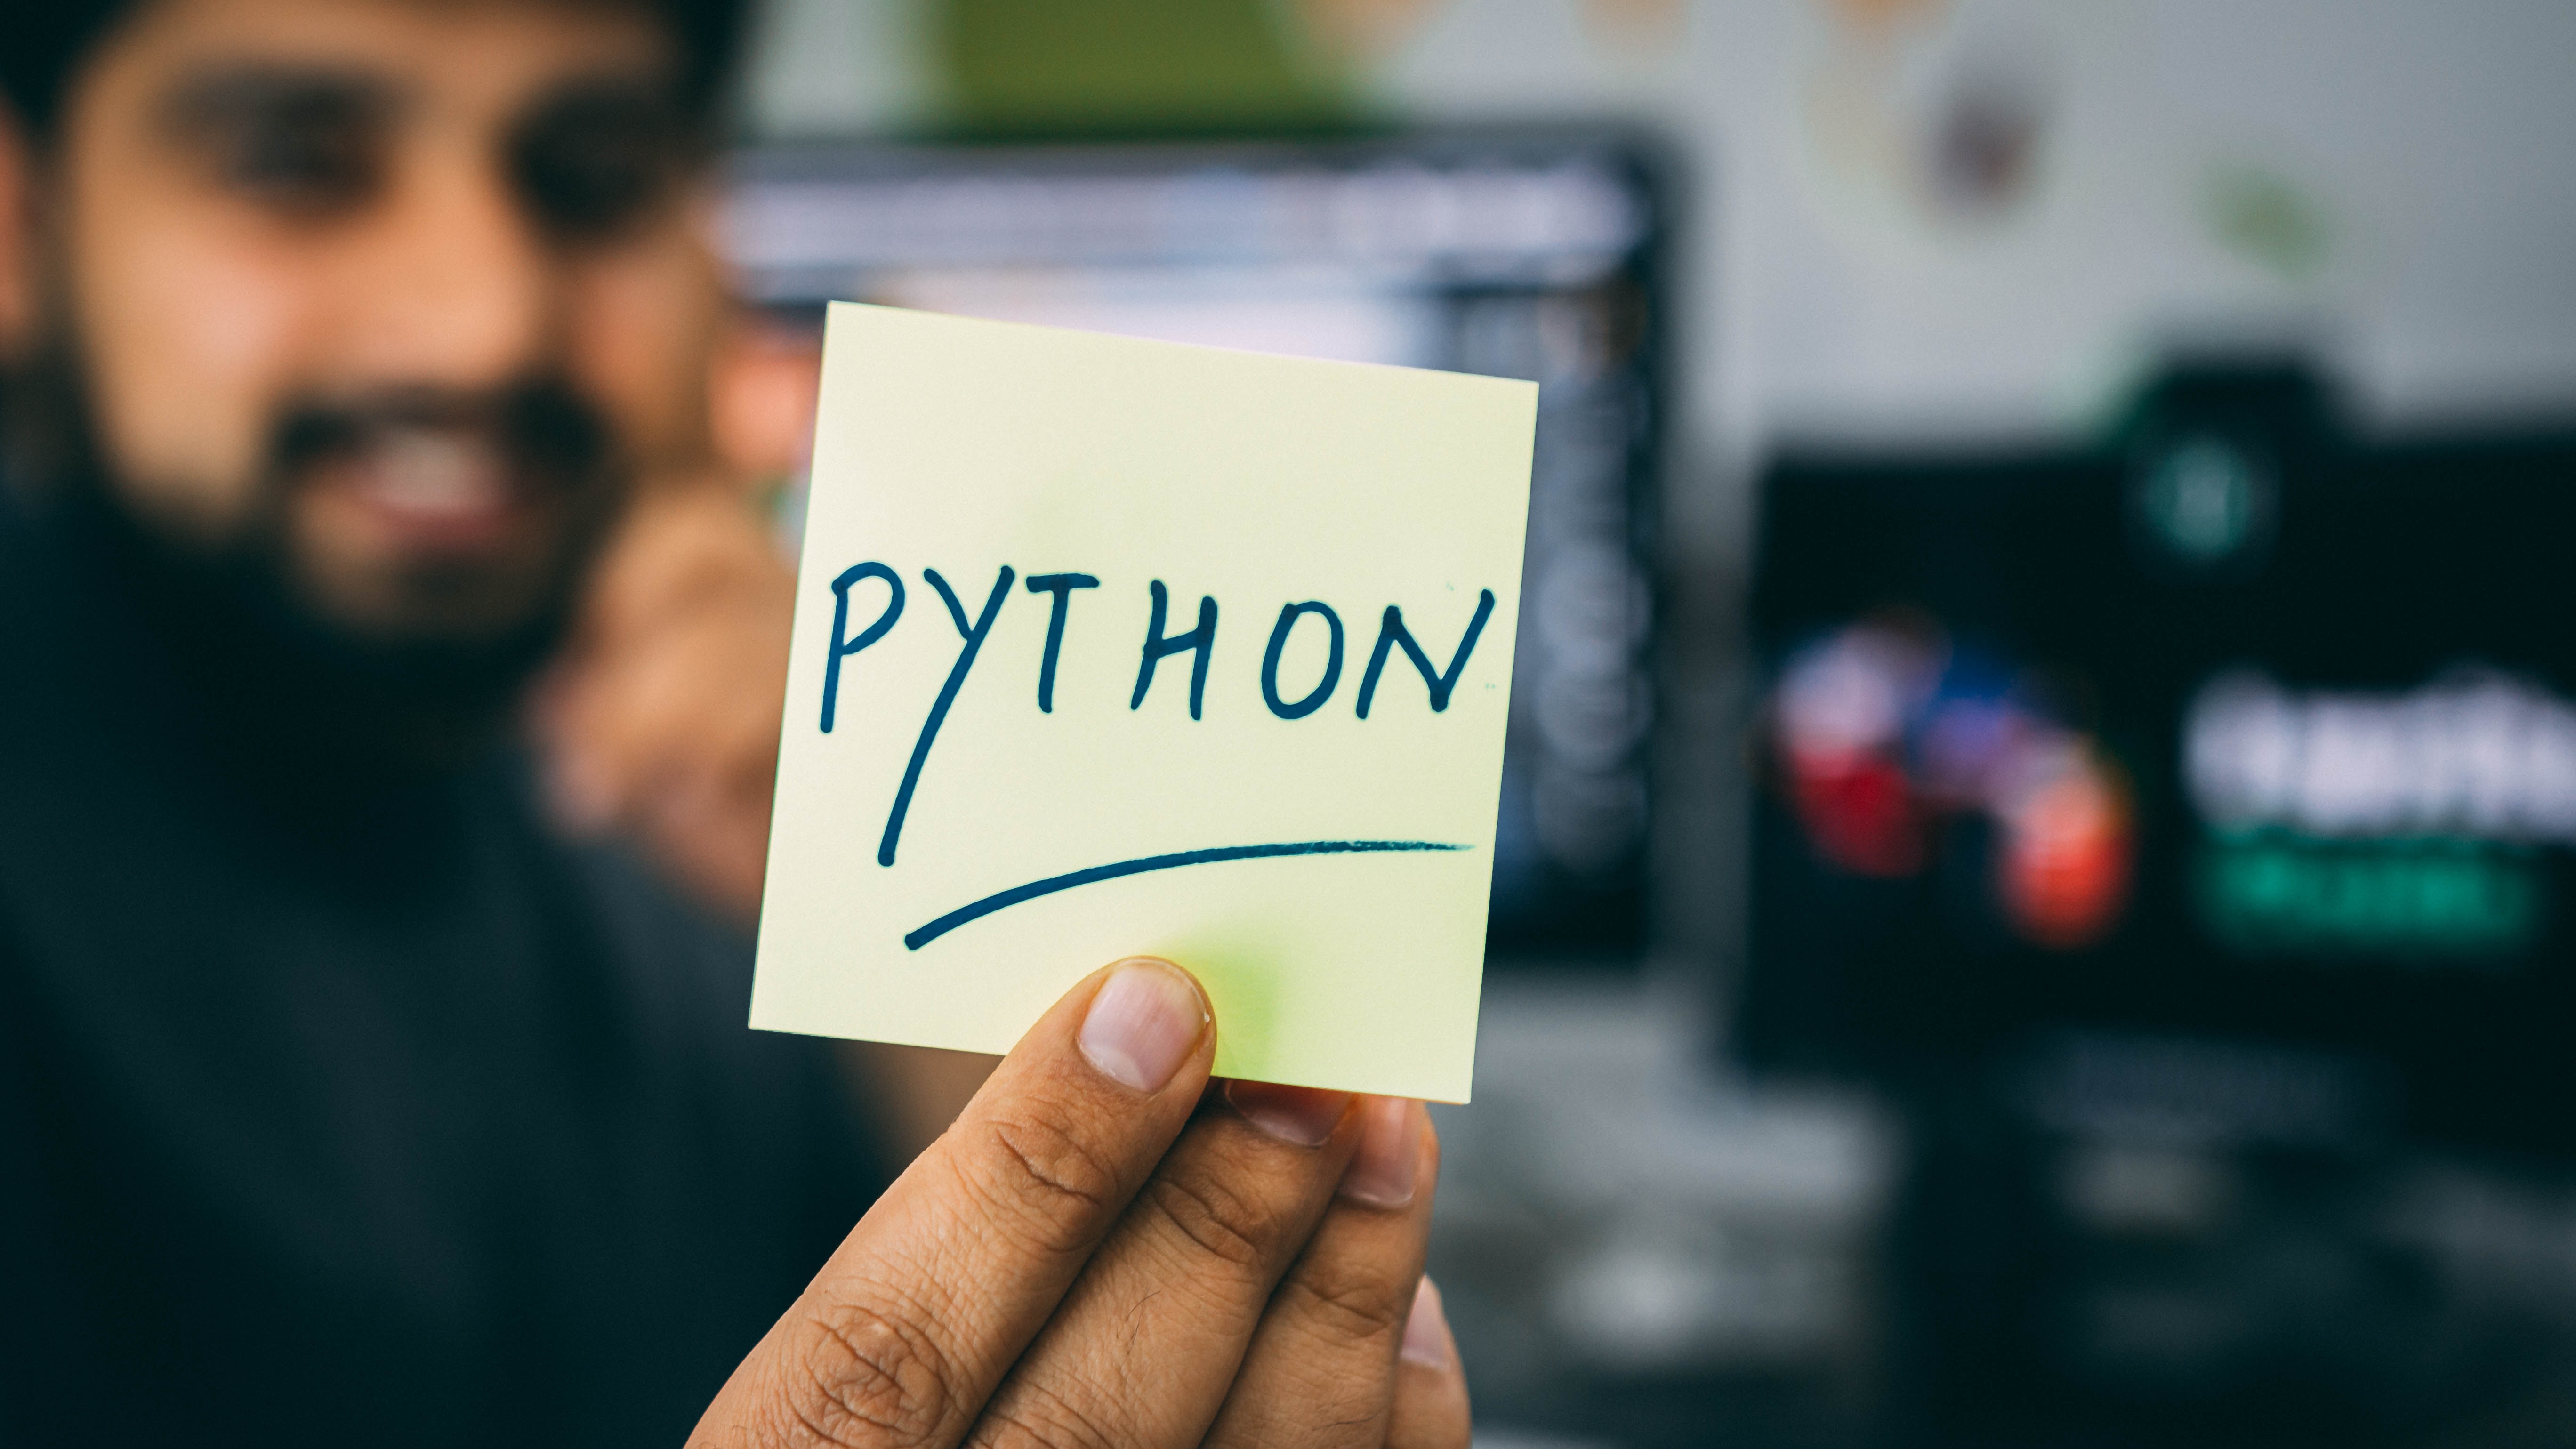 python-development-outsourcing-partner